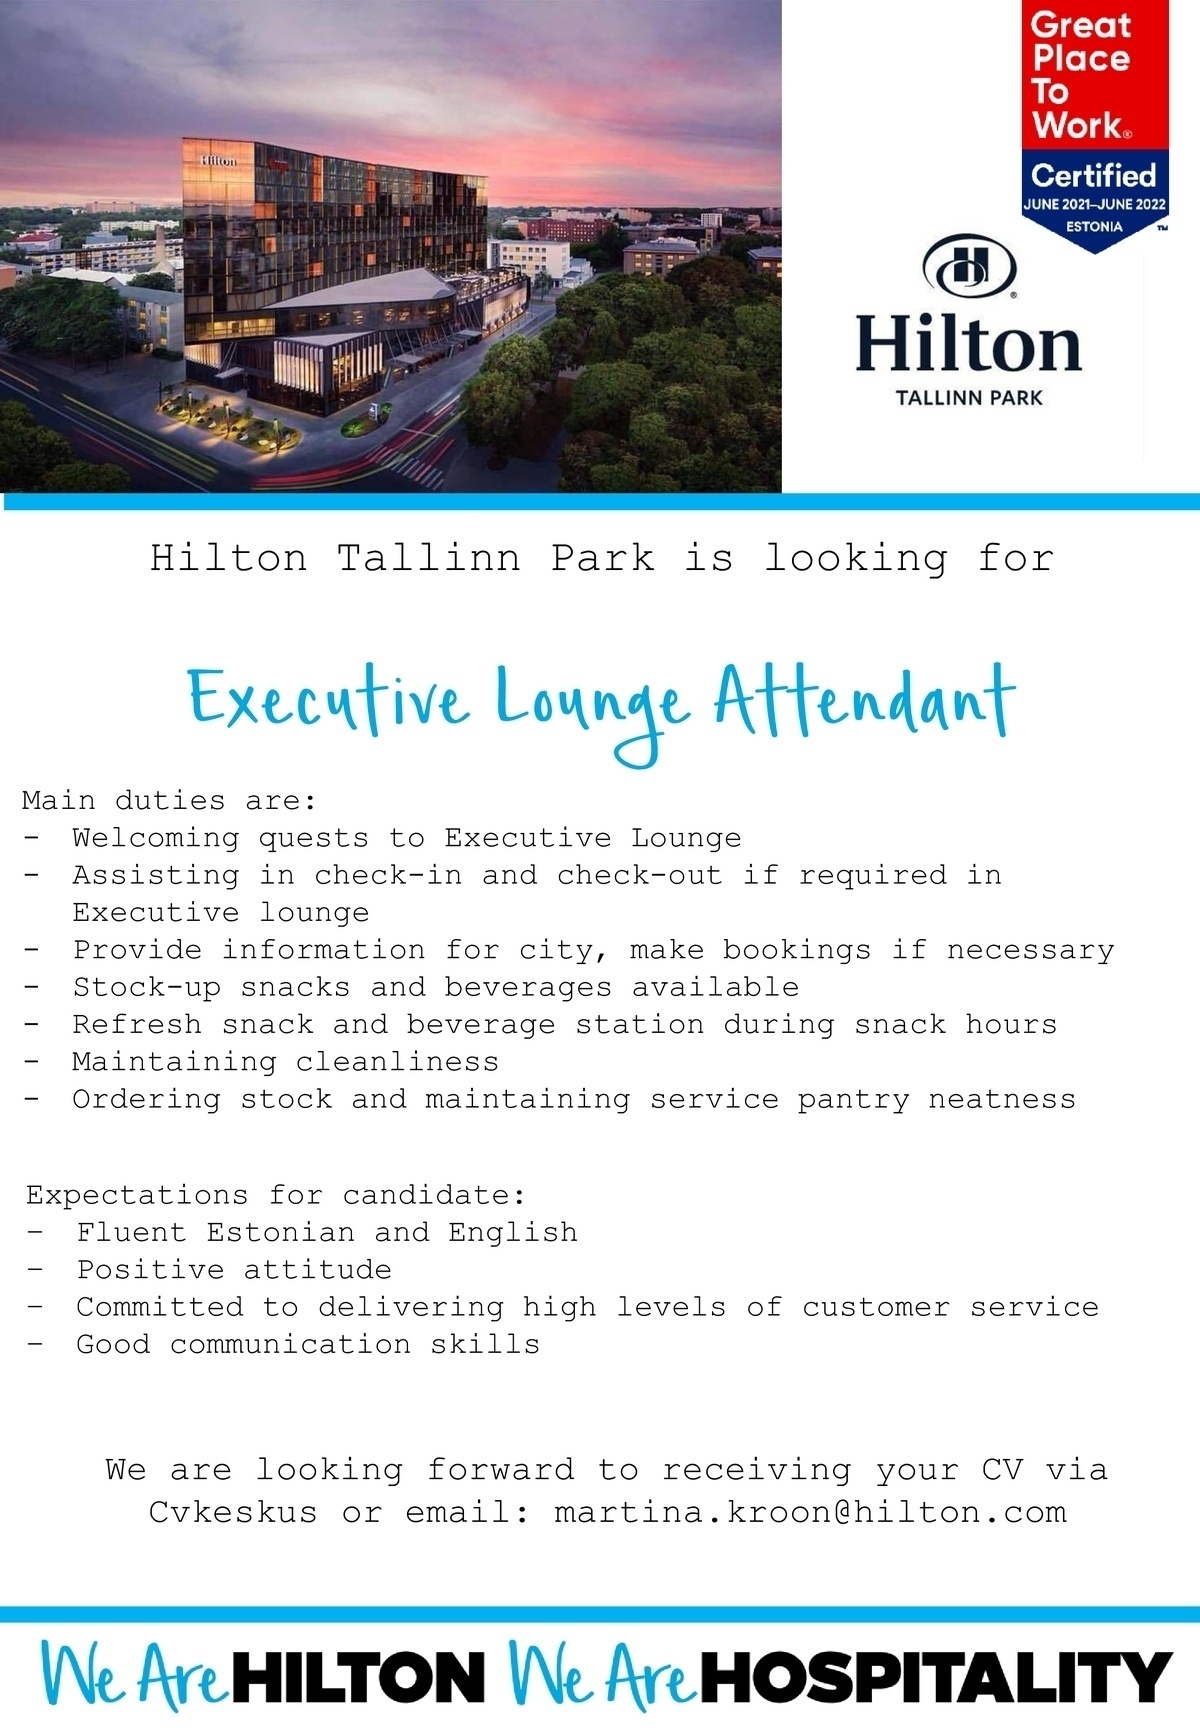 Hilton Tallinn Park Executive Lounge Attendant